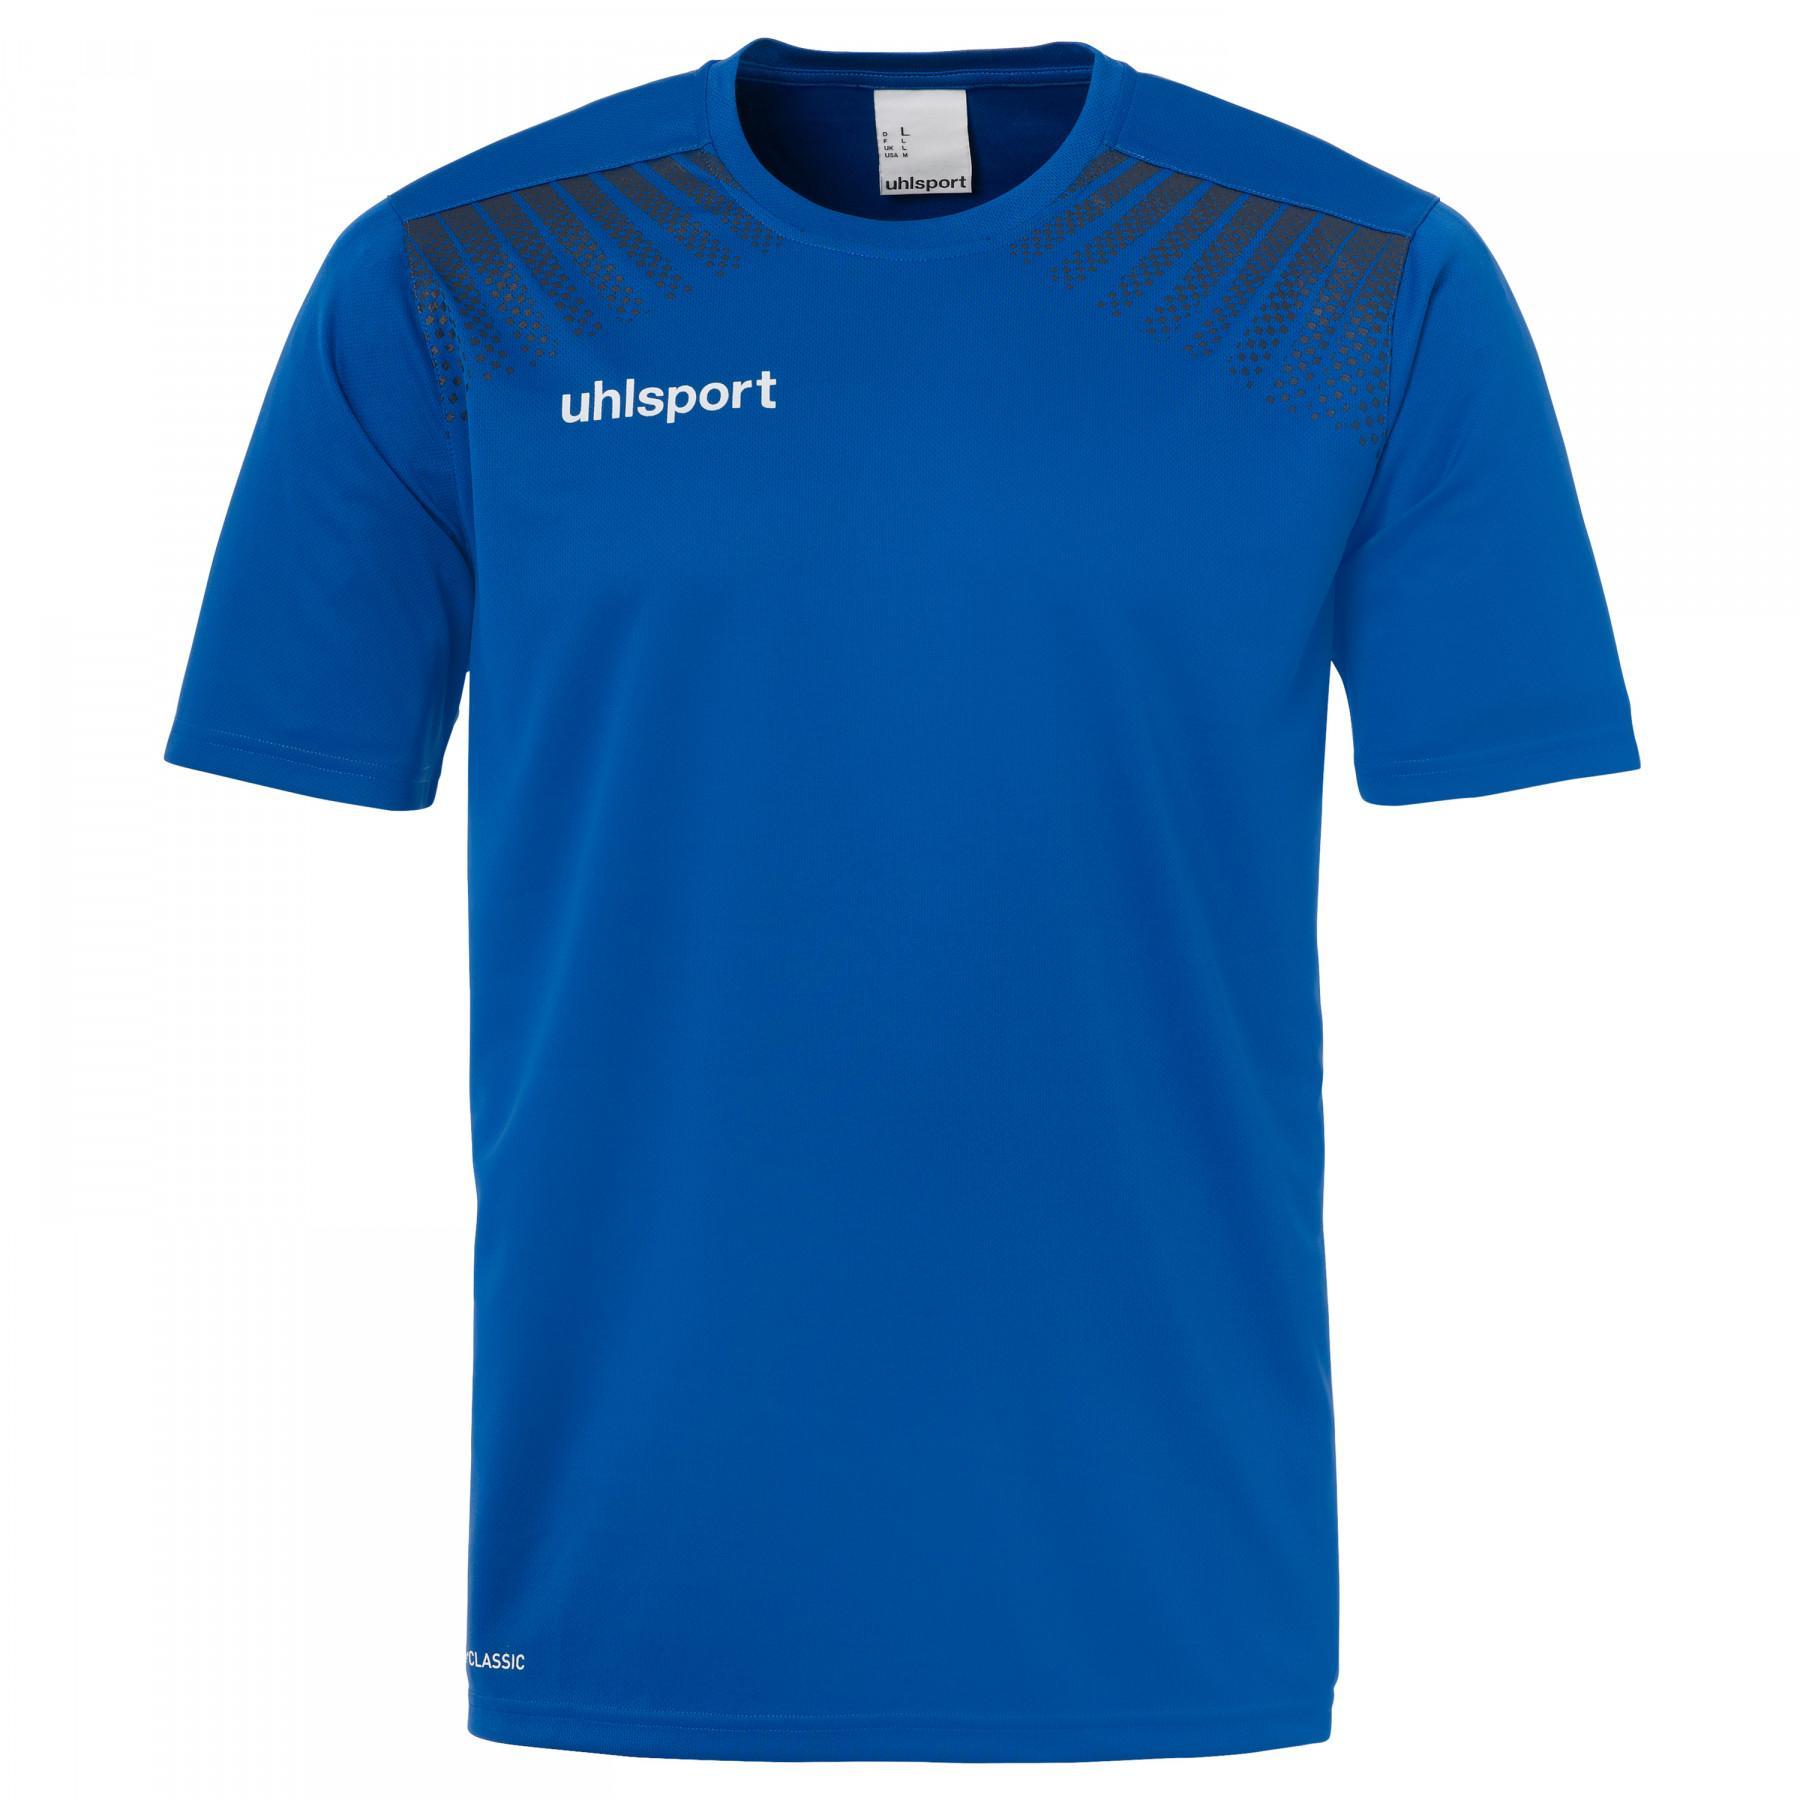 Child's T-shirt Uhlsport Goal